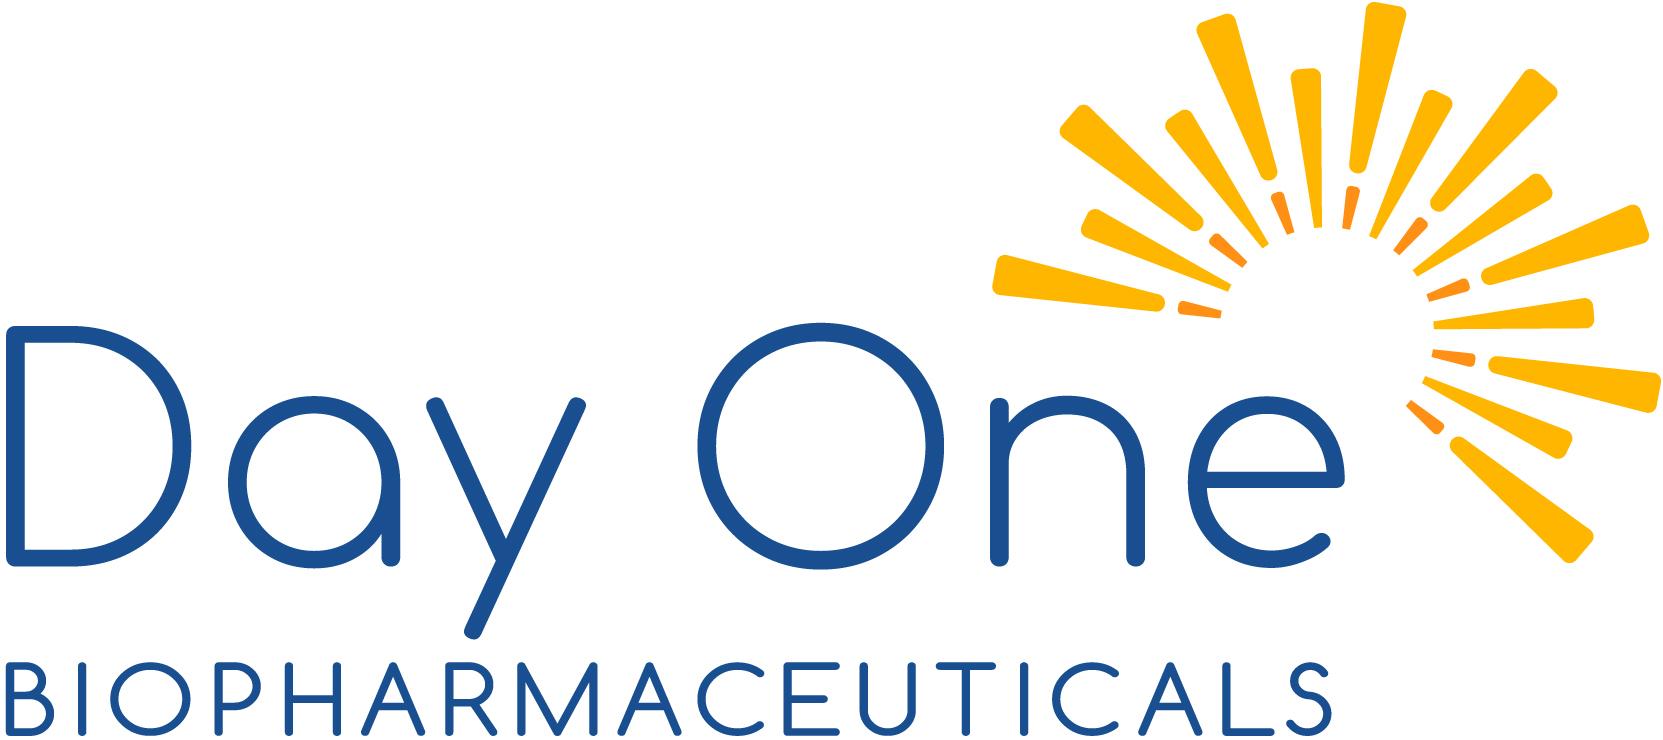 Day One Biopharaceuticals logo